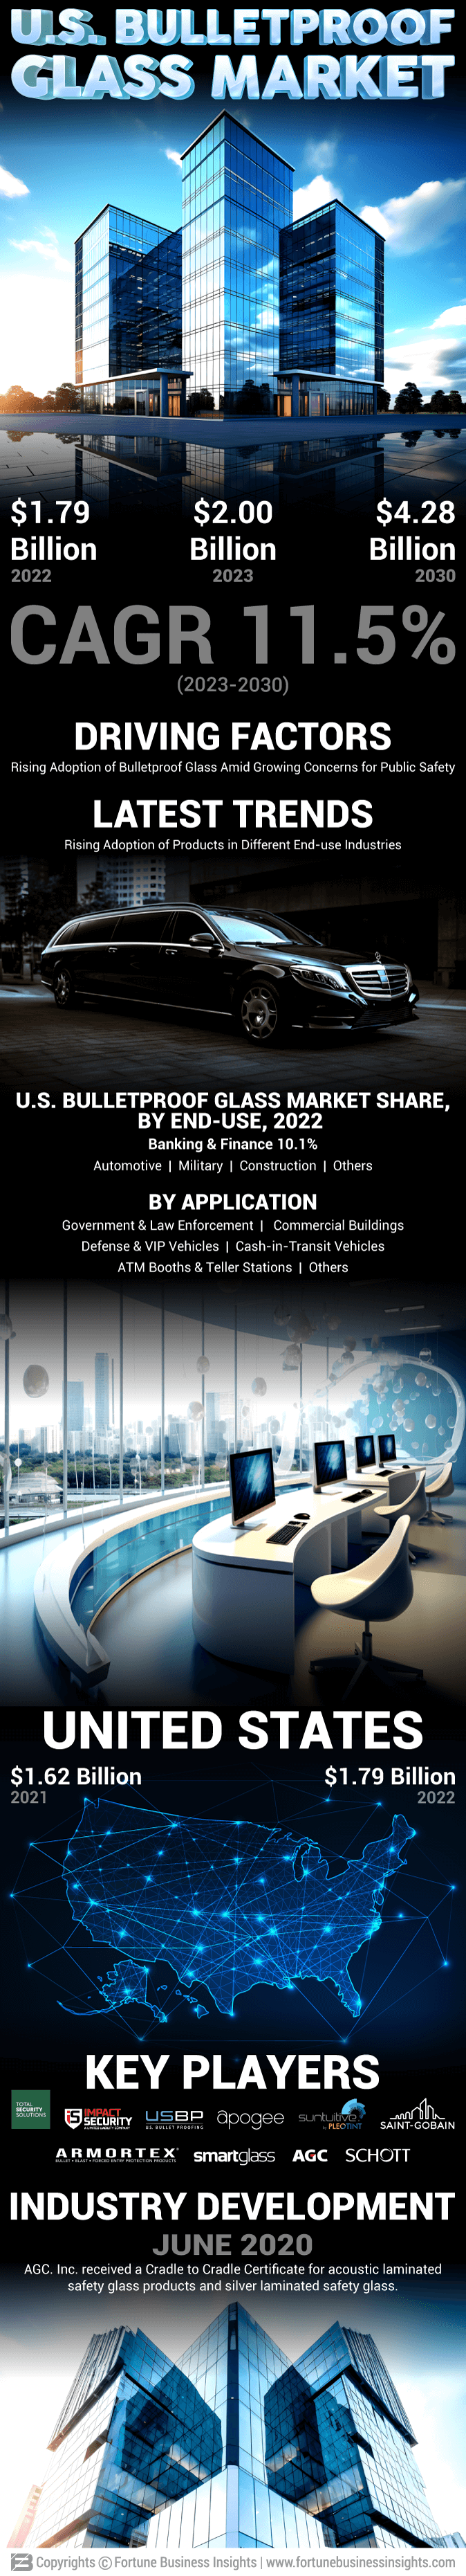 U.S. Bulletproof Glass Market